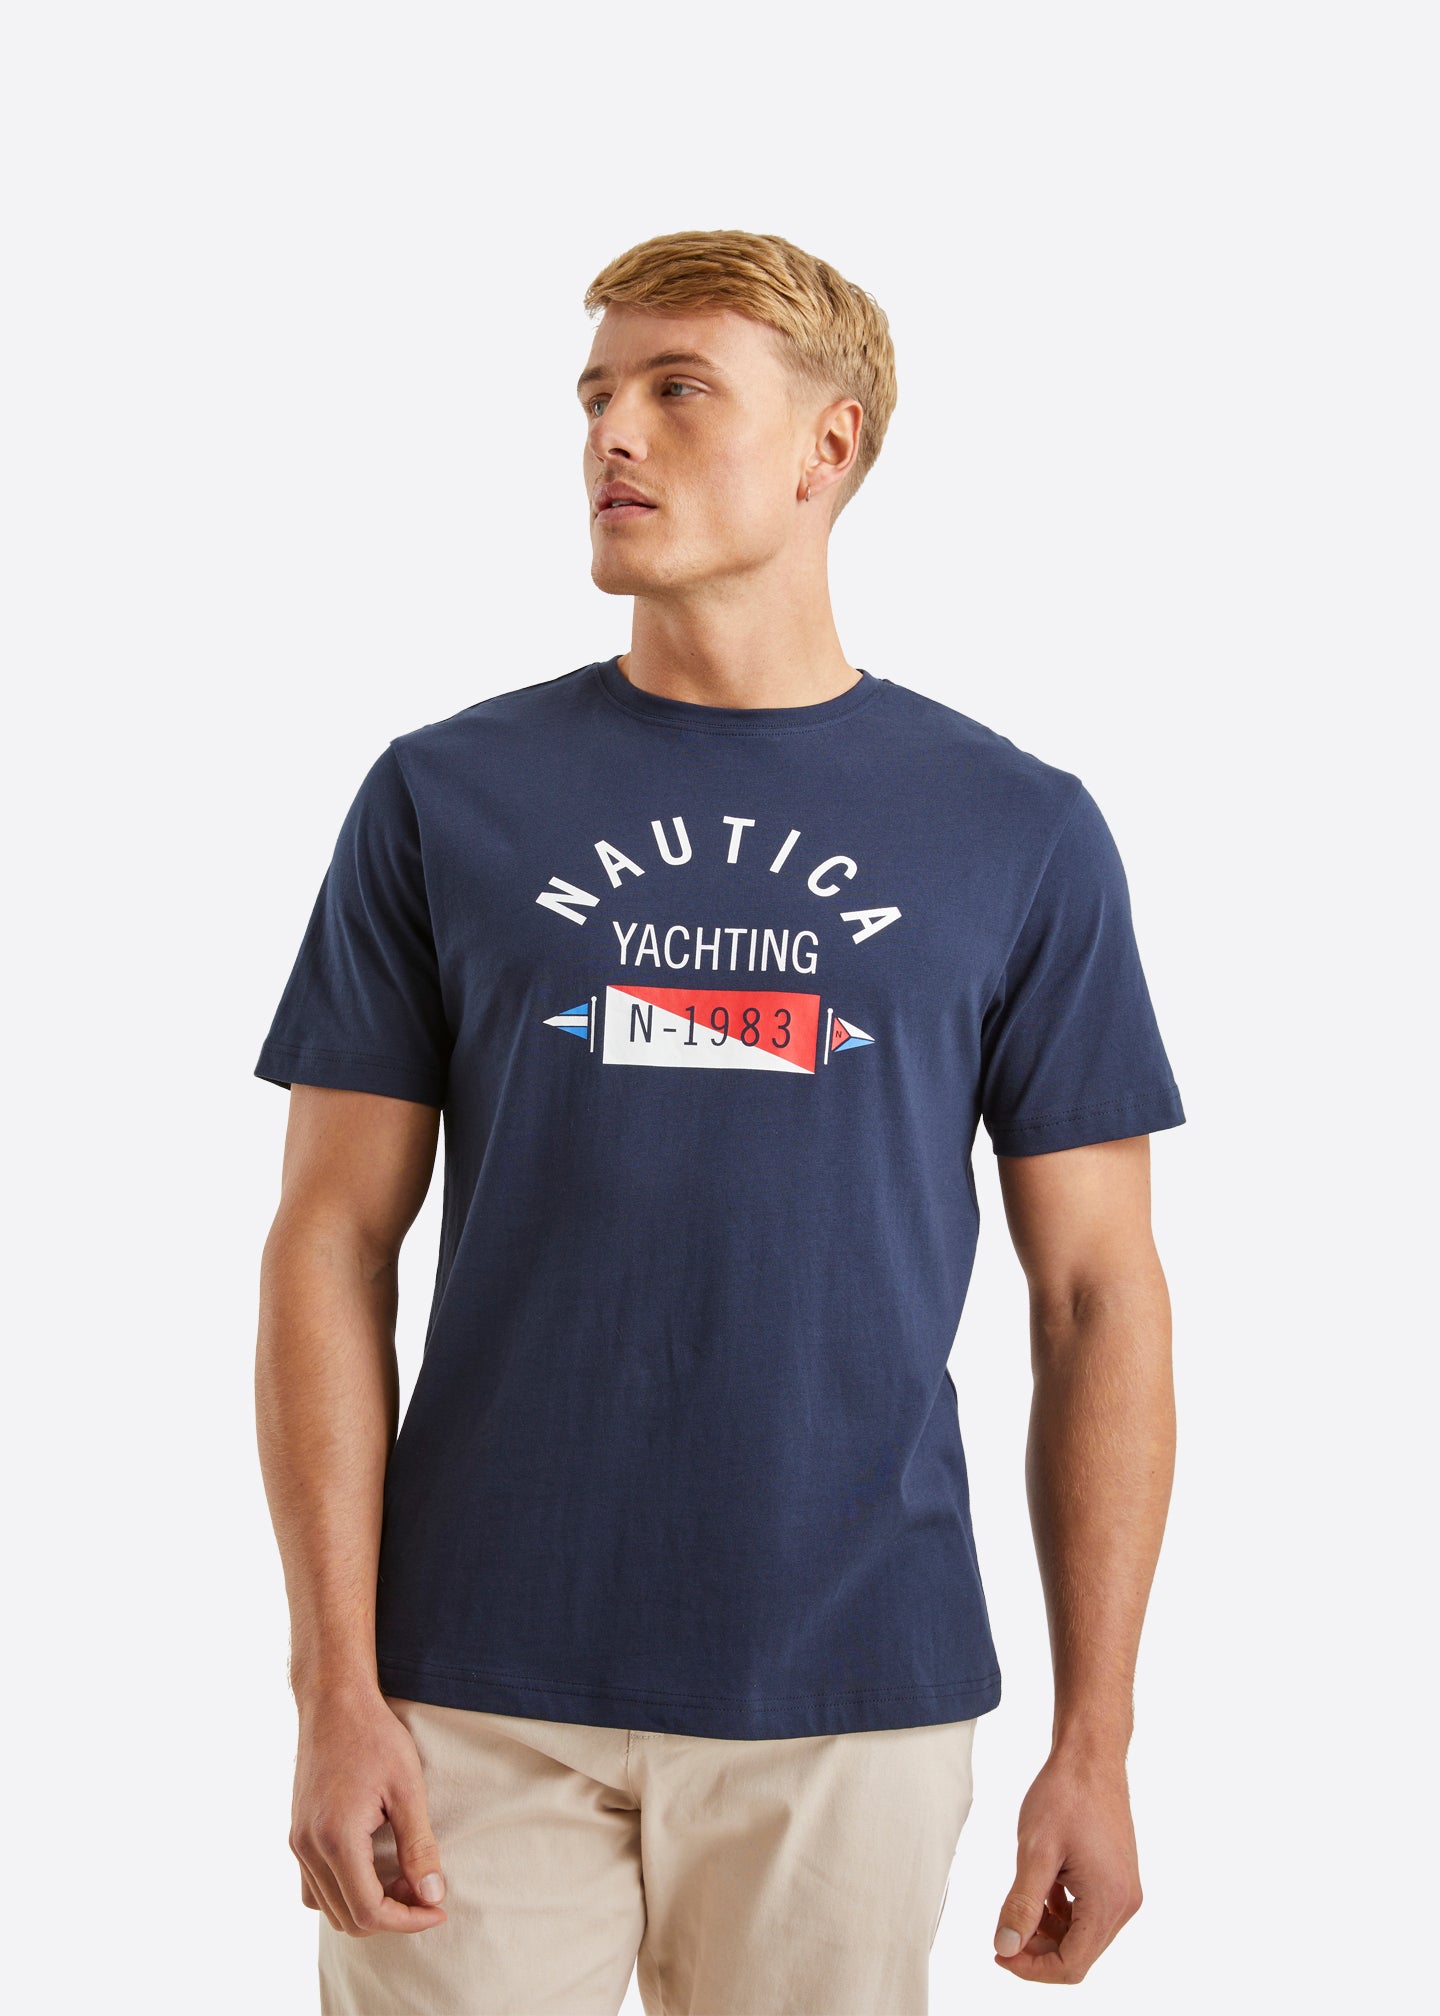 T-Shirt - Marine LEVIS